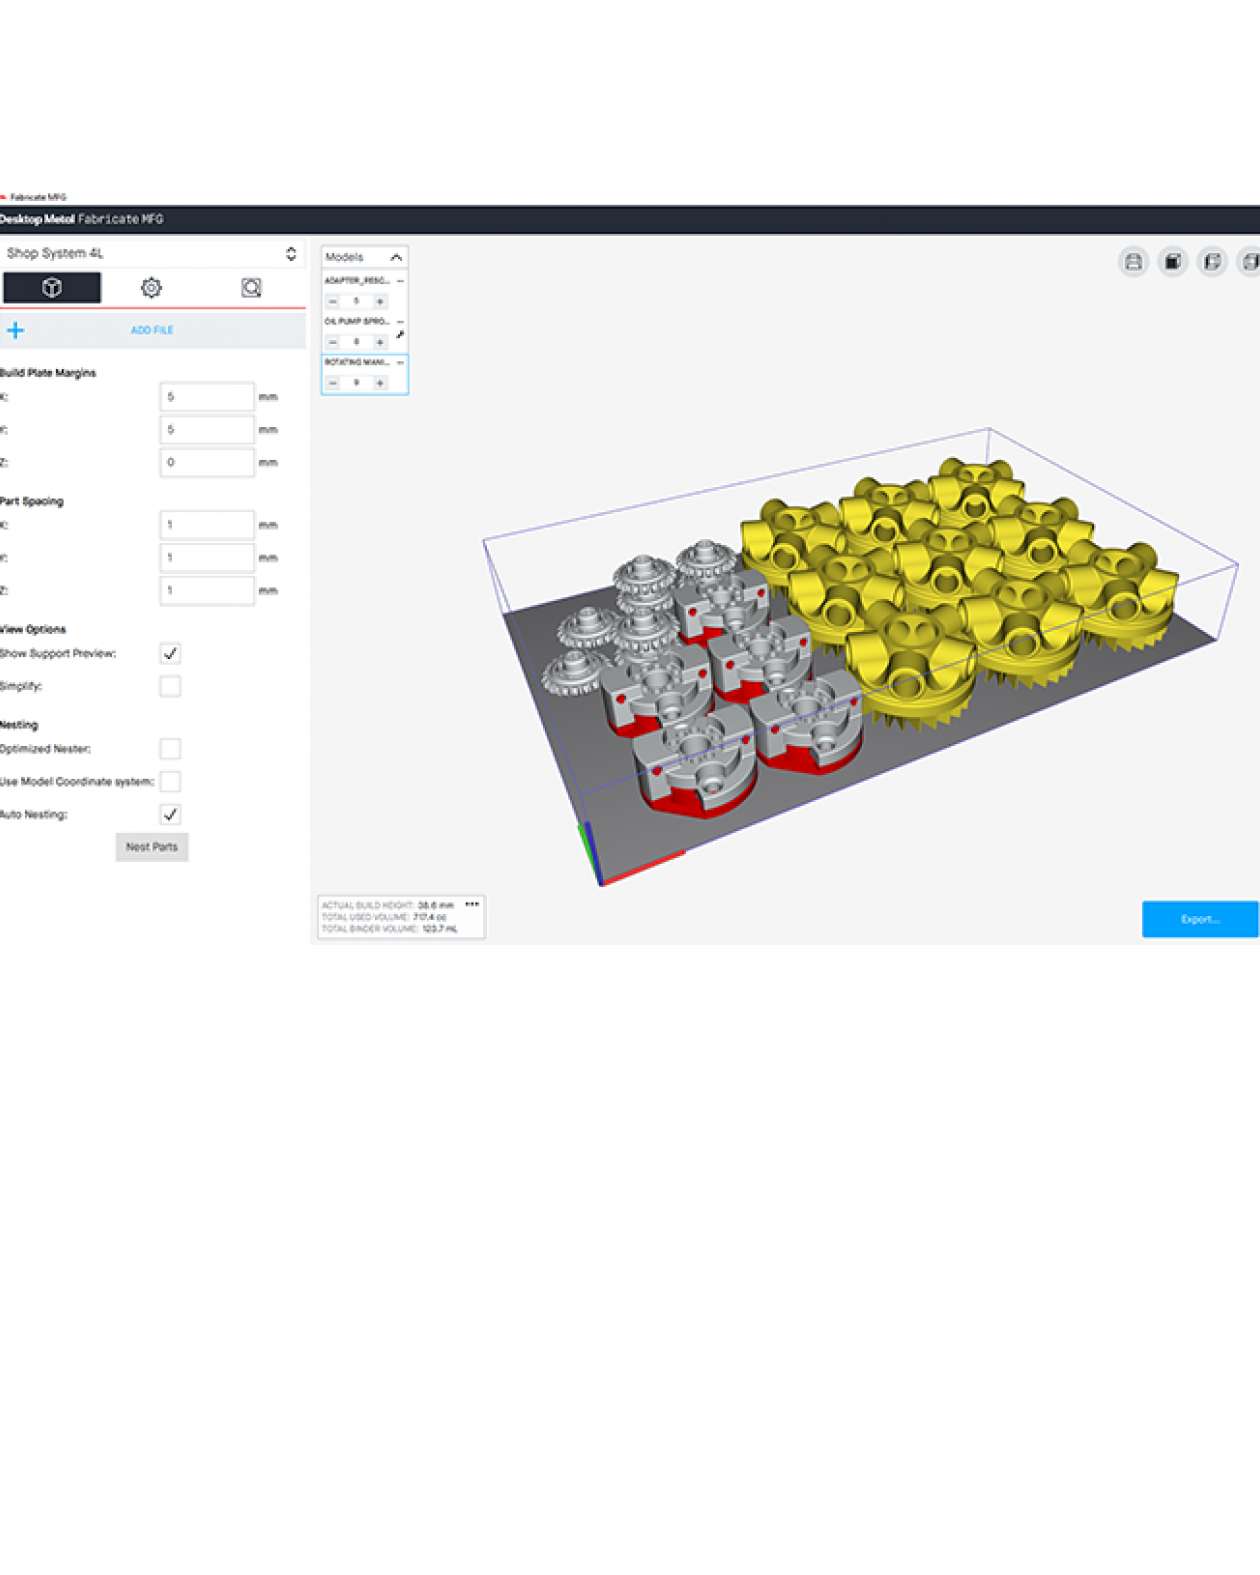 Live Build MFG production metal 3D printing build generation software